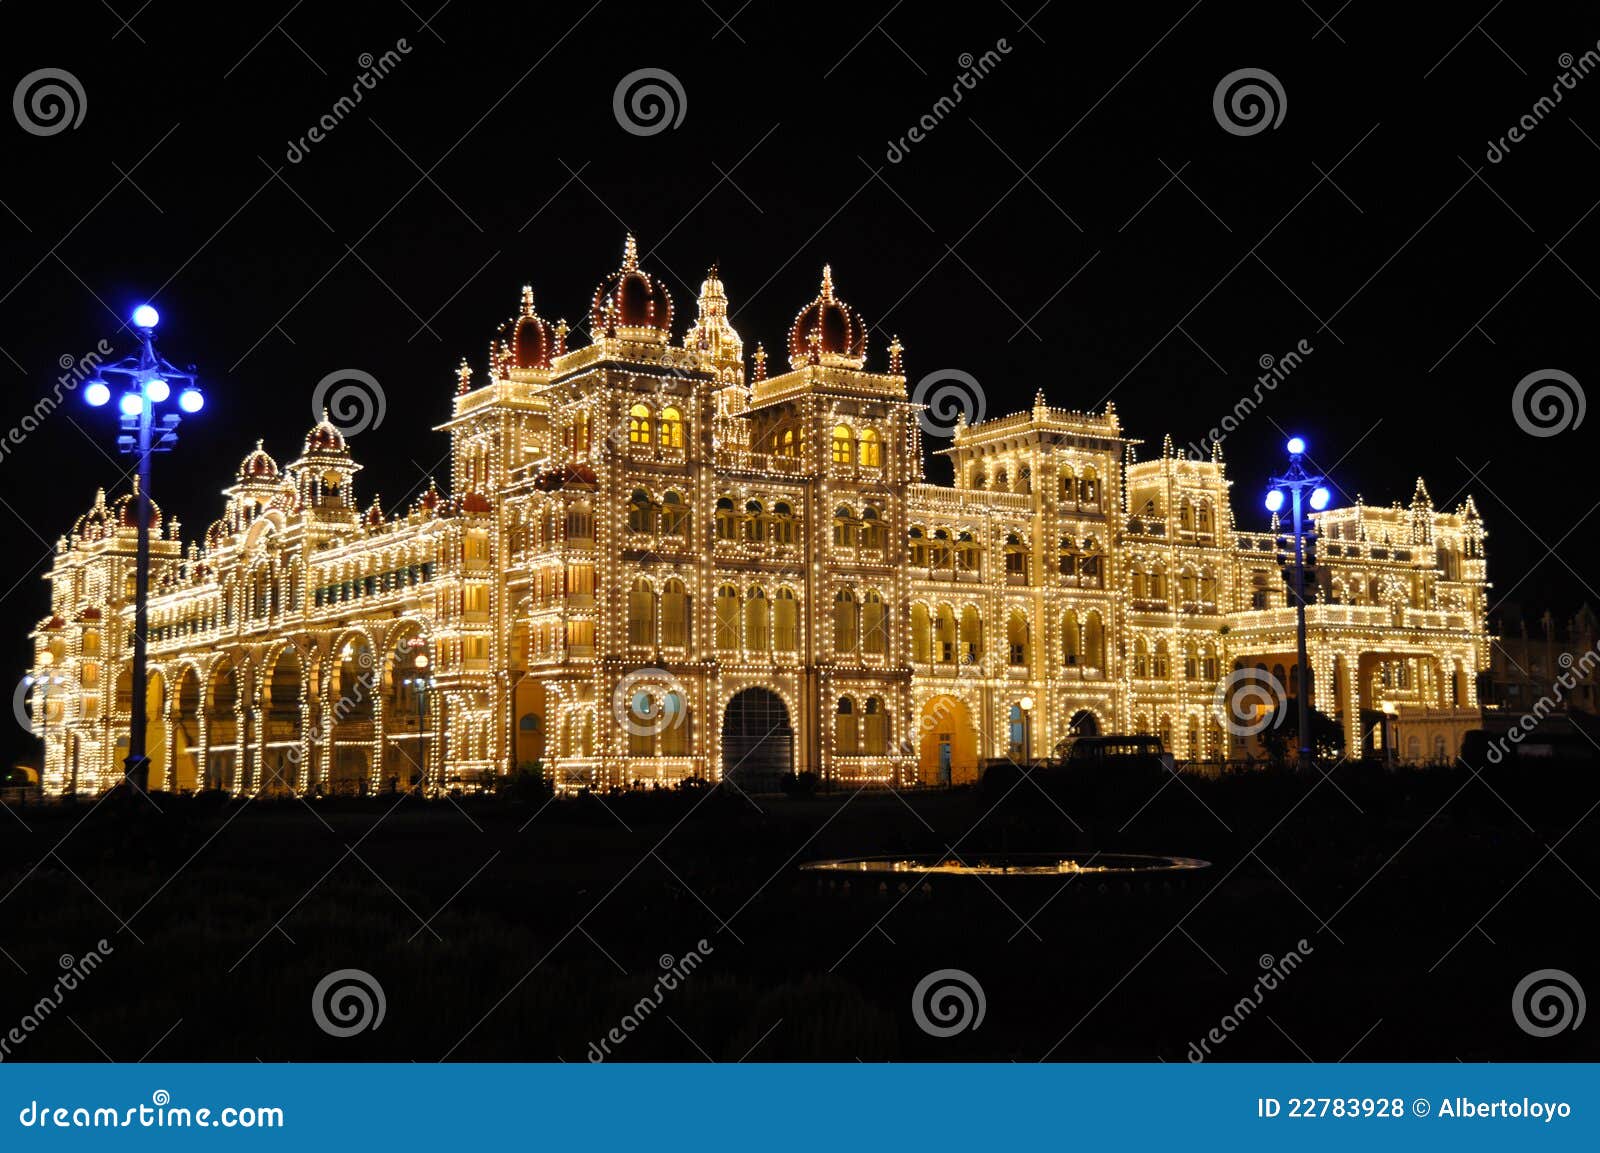 the mysore palace at night